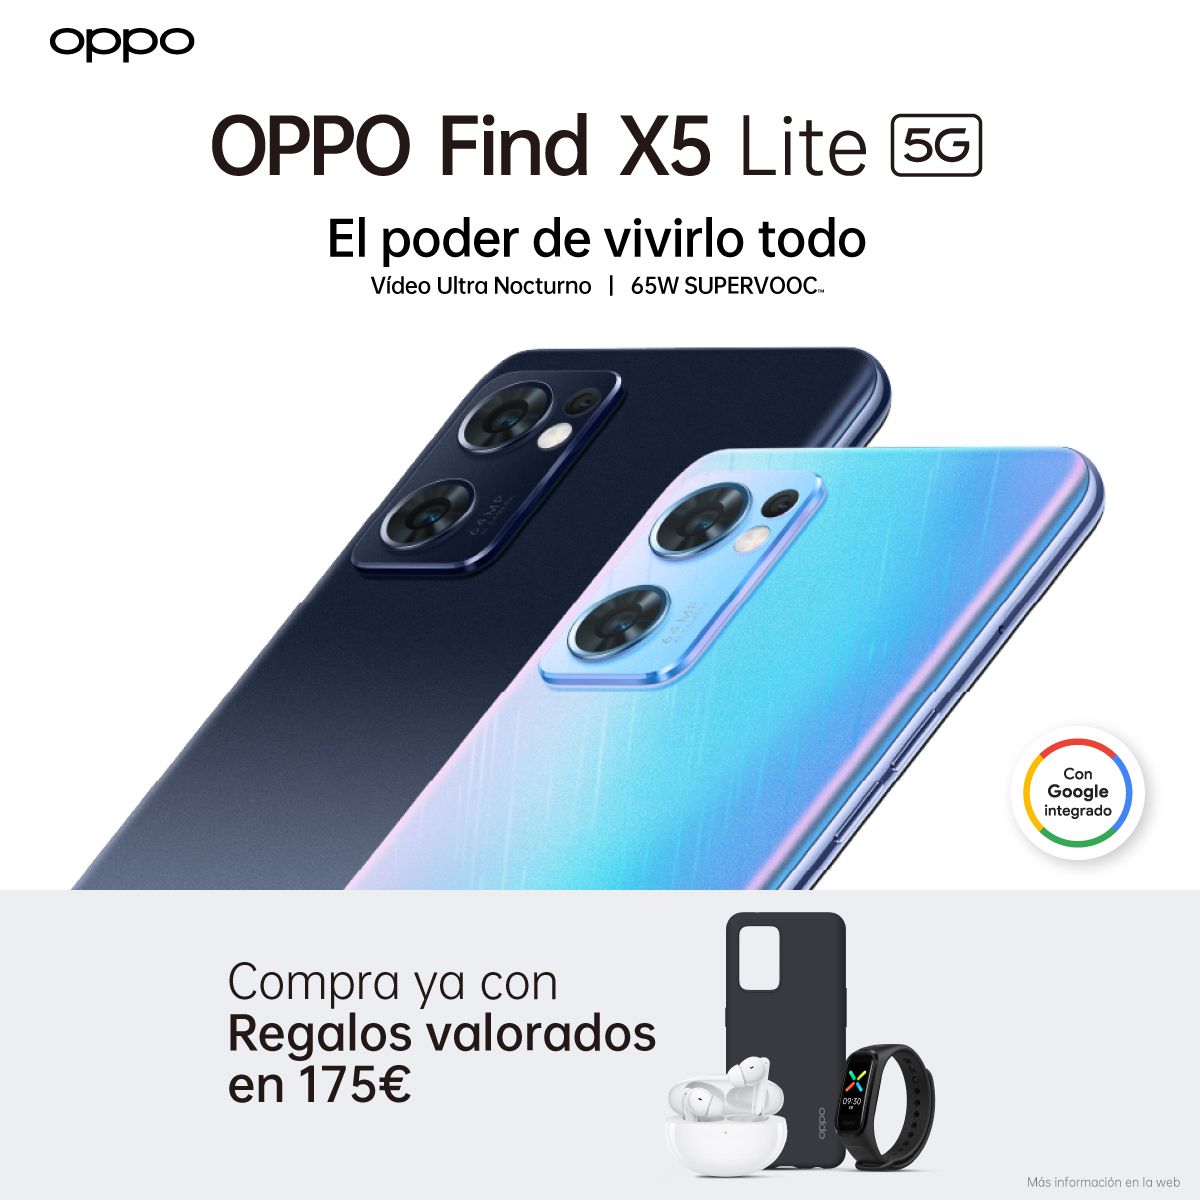 OPPO Find X5 Lite ya disponible en España